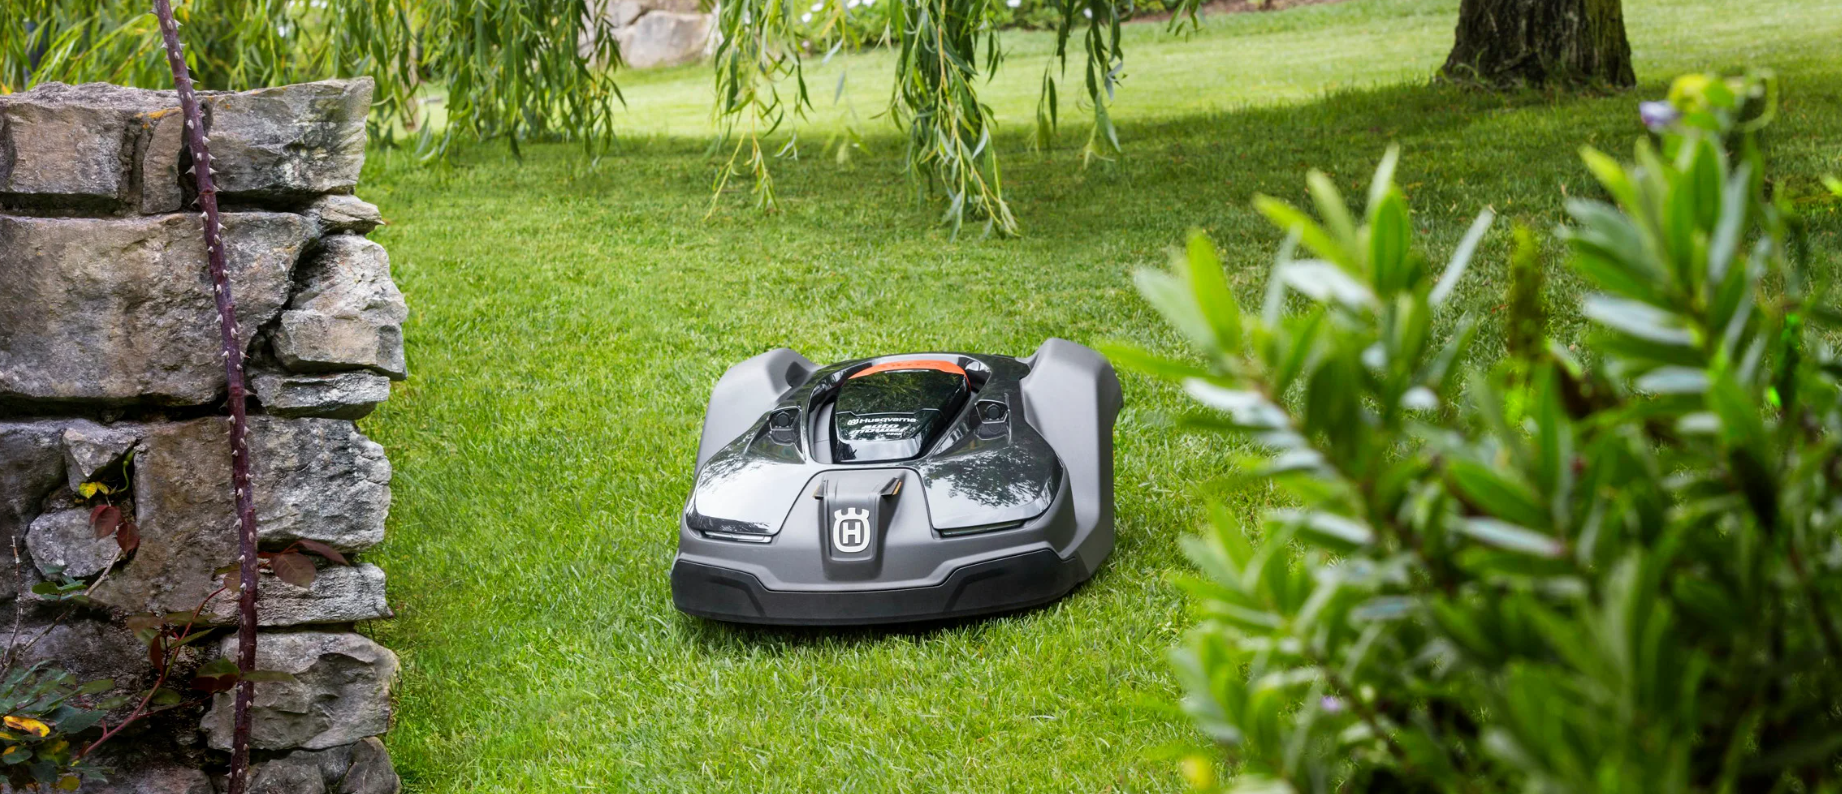 Robotic Auto Lawn Mowers